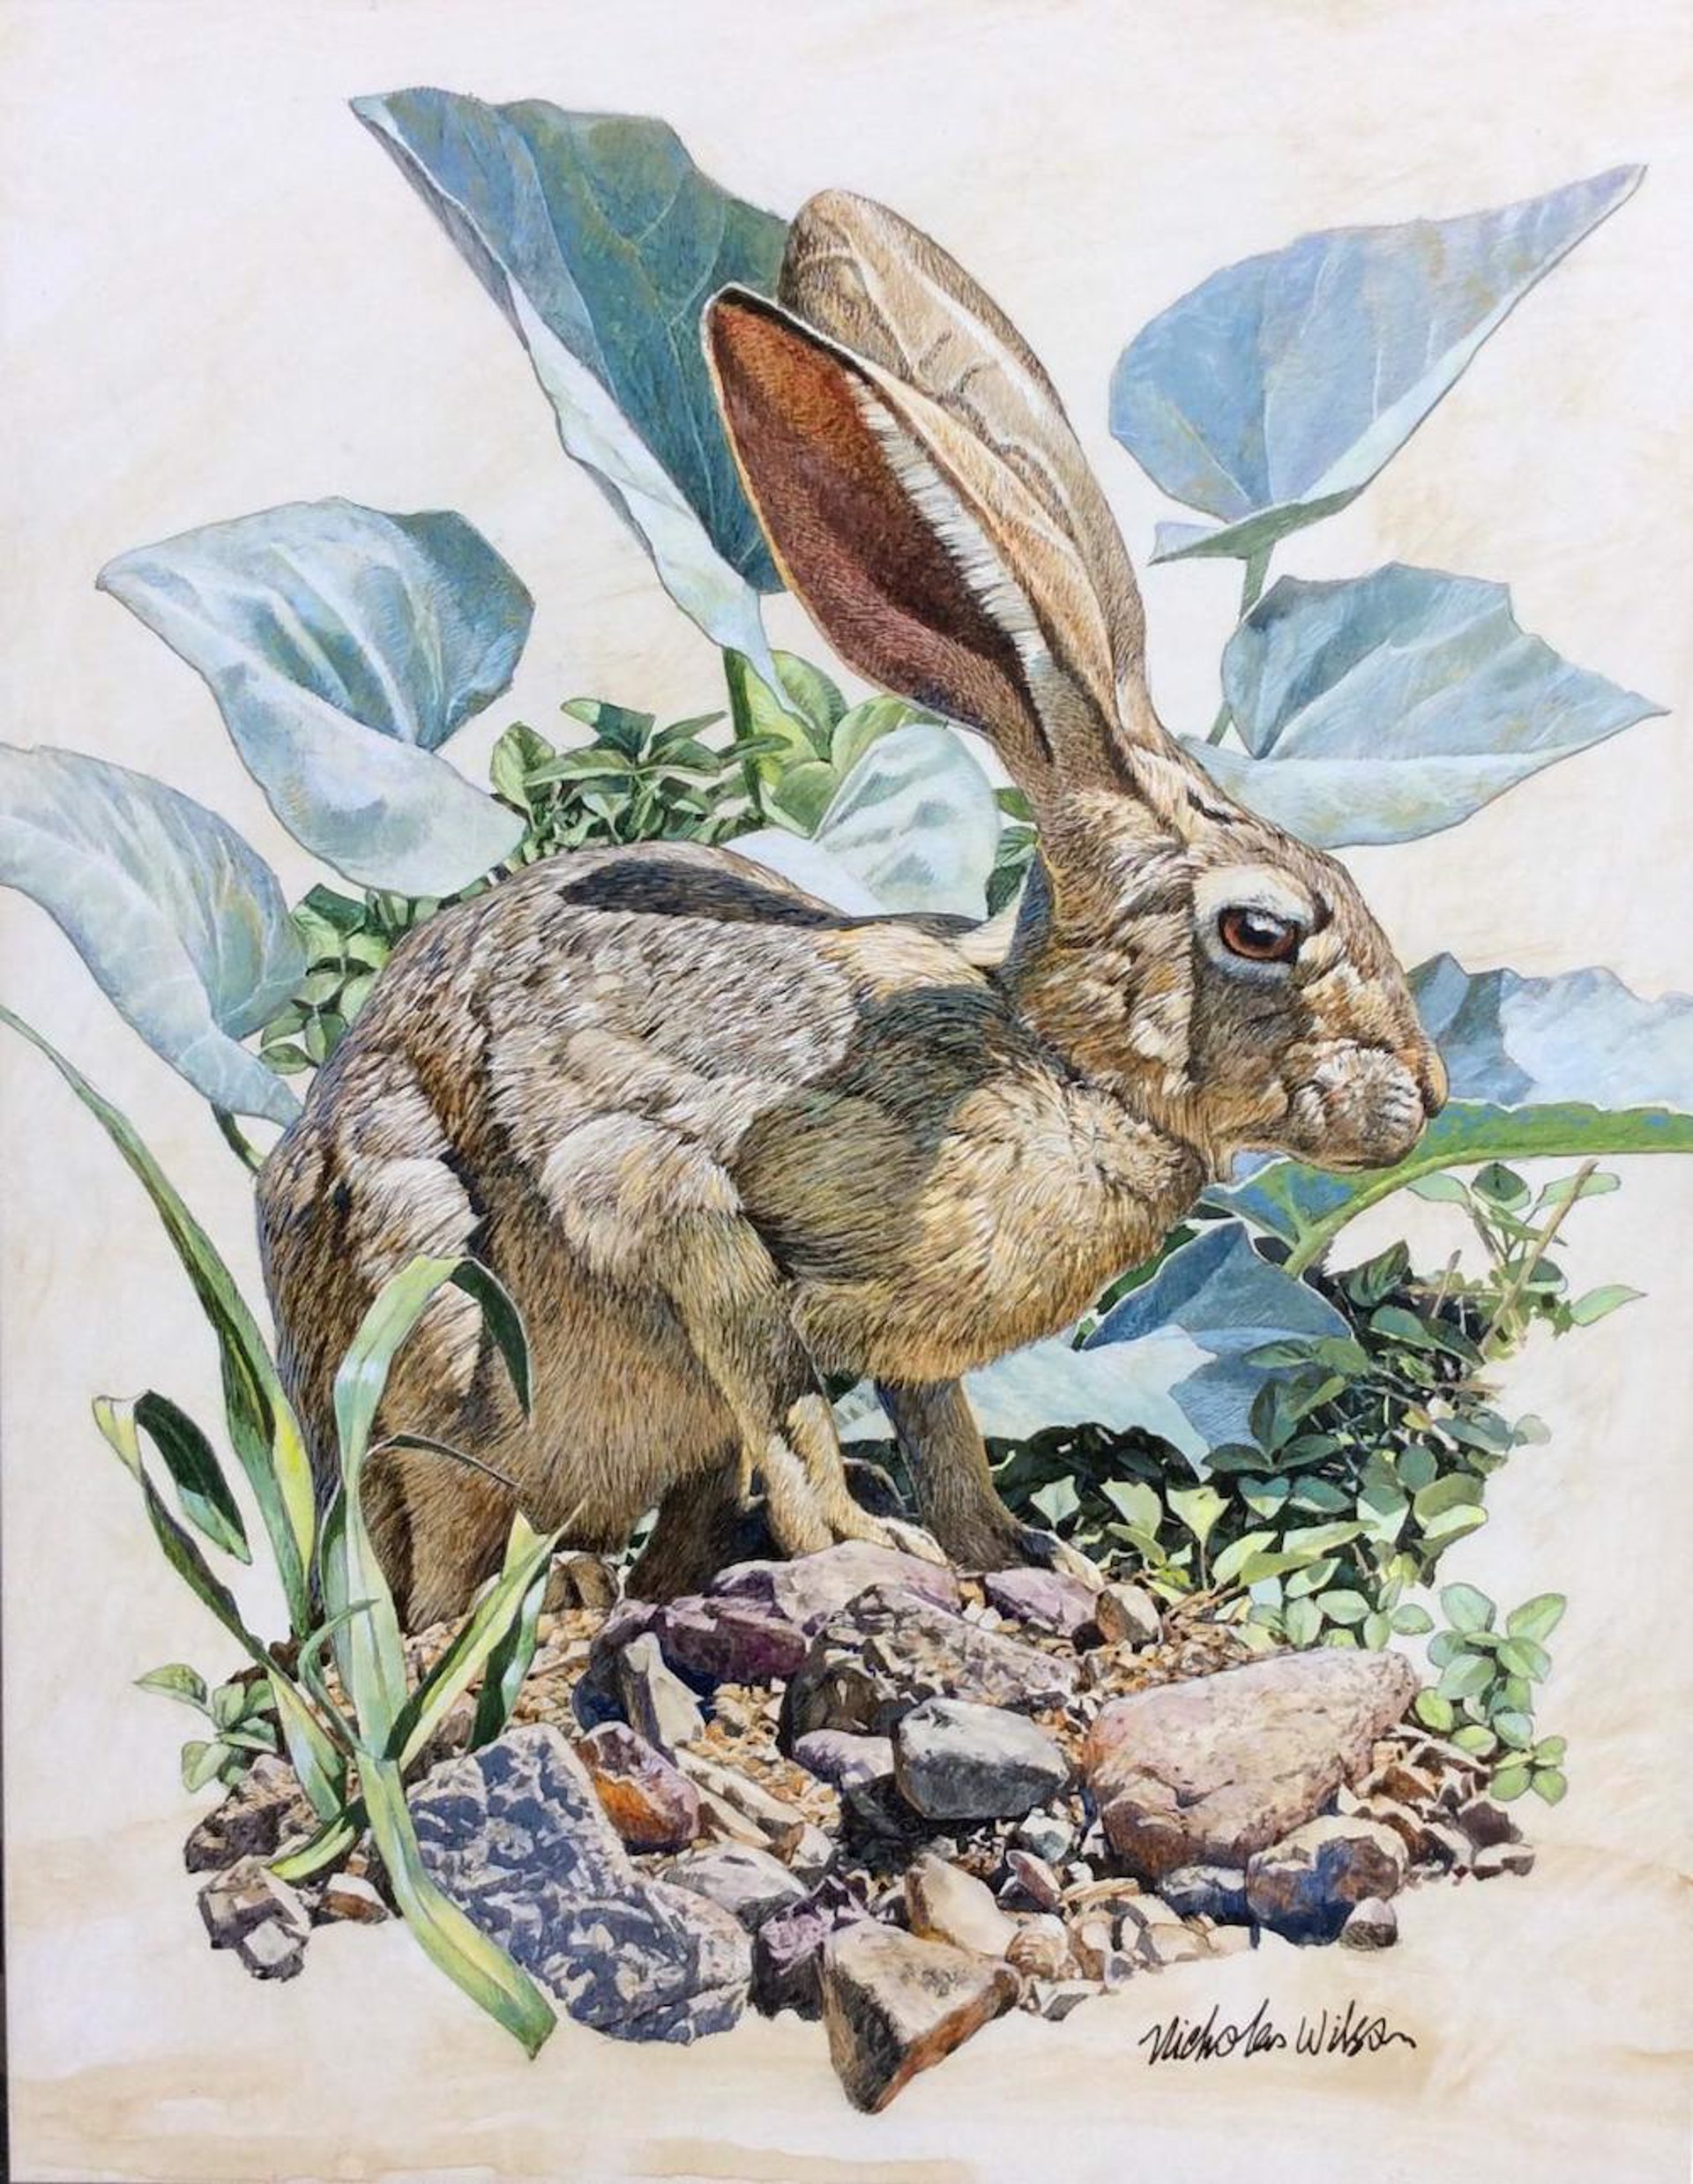 Desert Hare by Nicholas Wilson